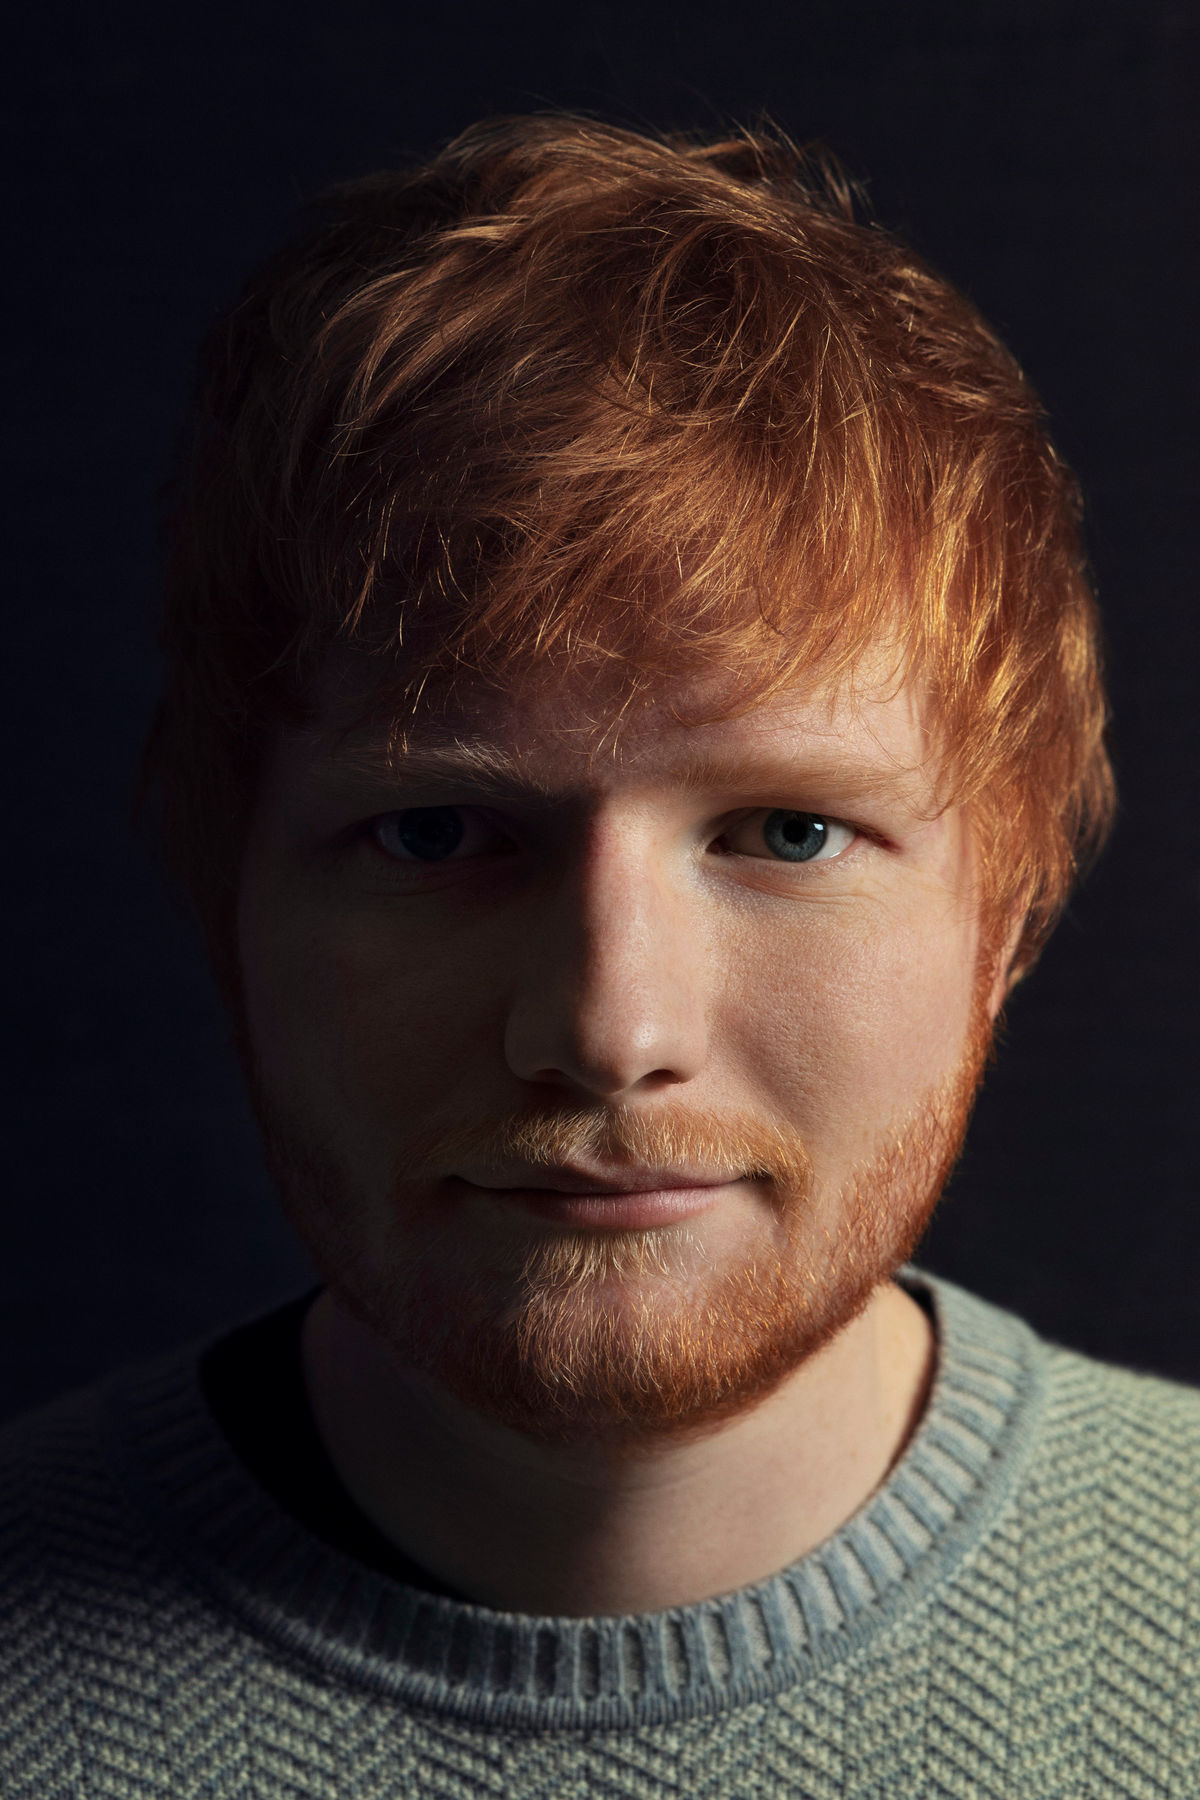 Ed Sheeran photo by Mark Surridge